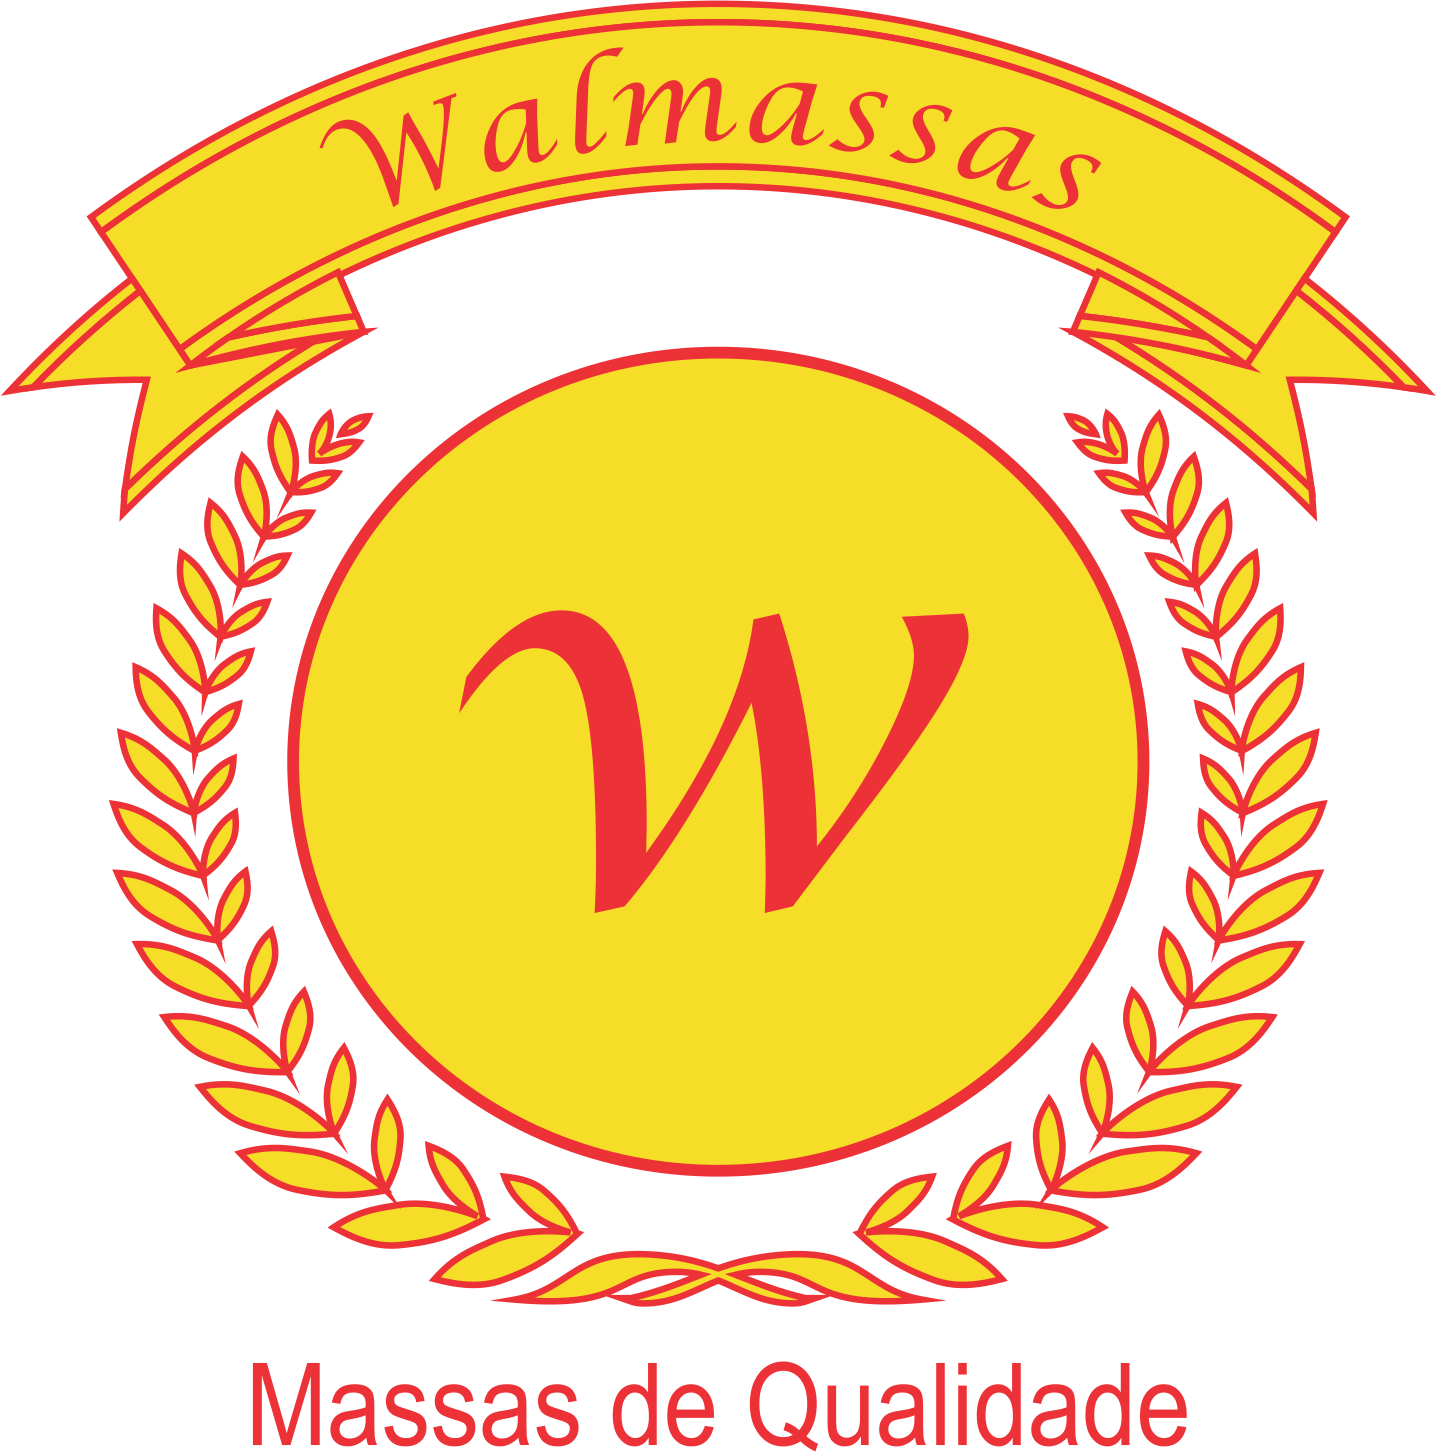 Walmassas